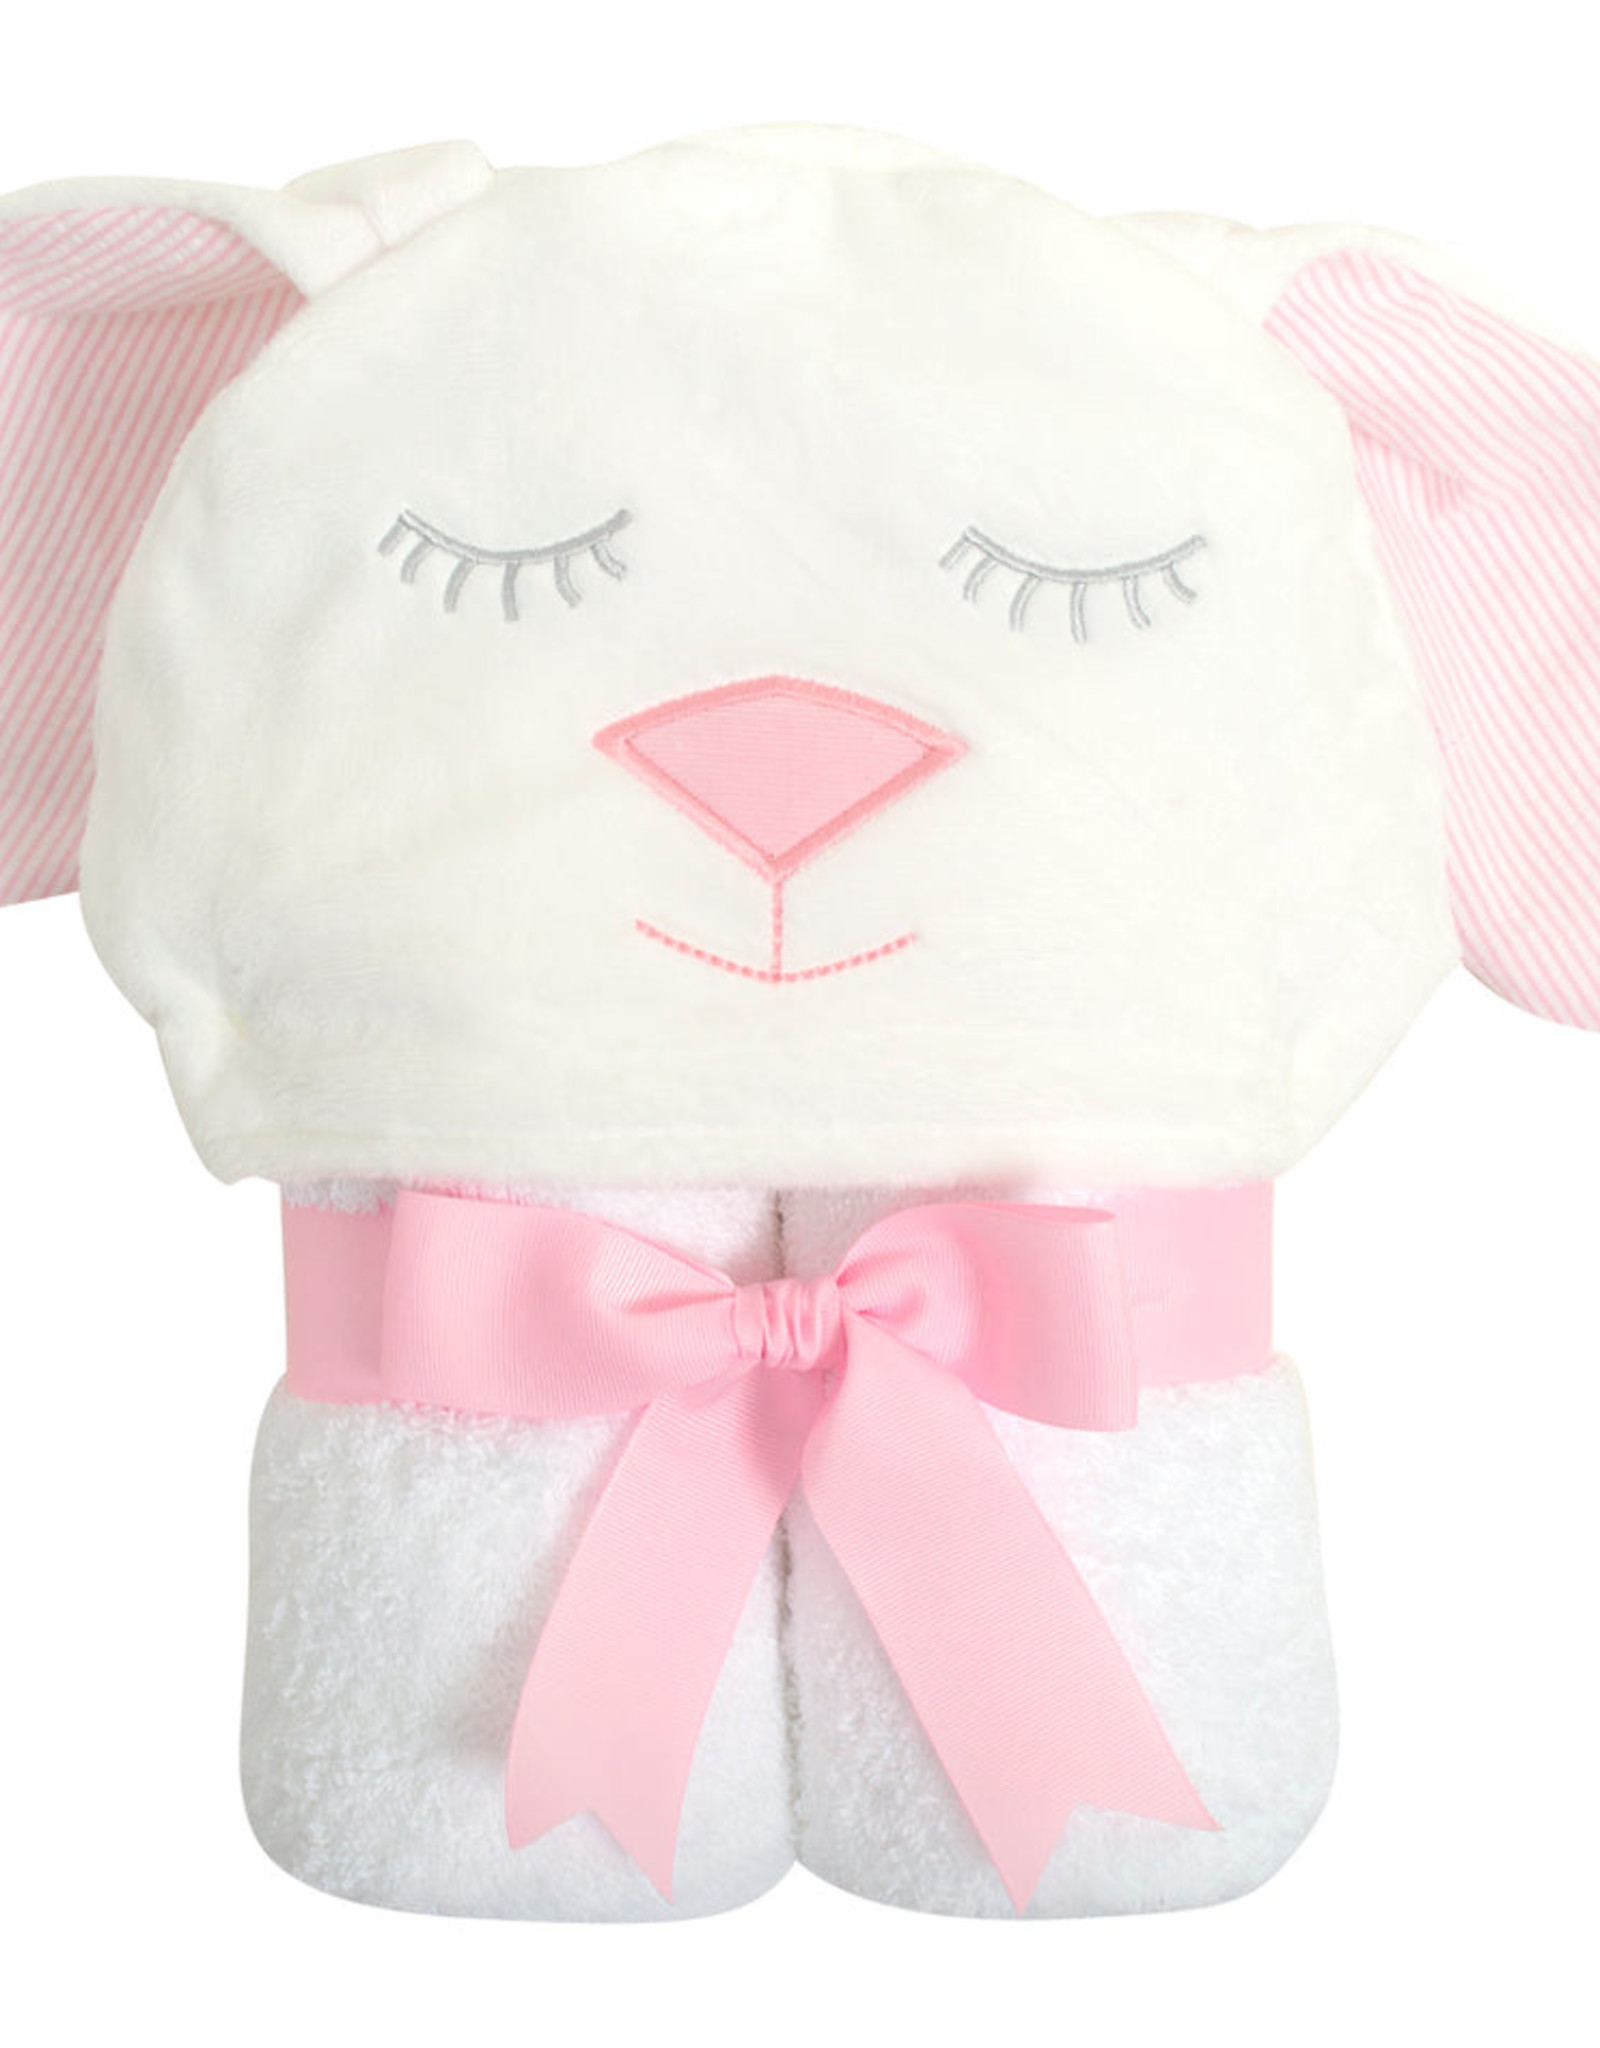 3 Marthas Character Towel Pink Bunny